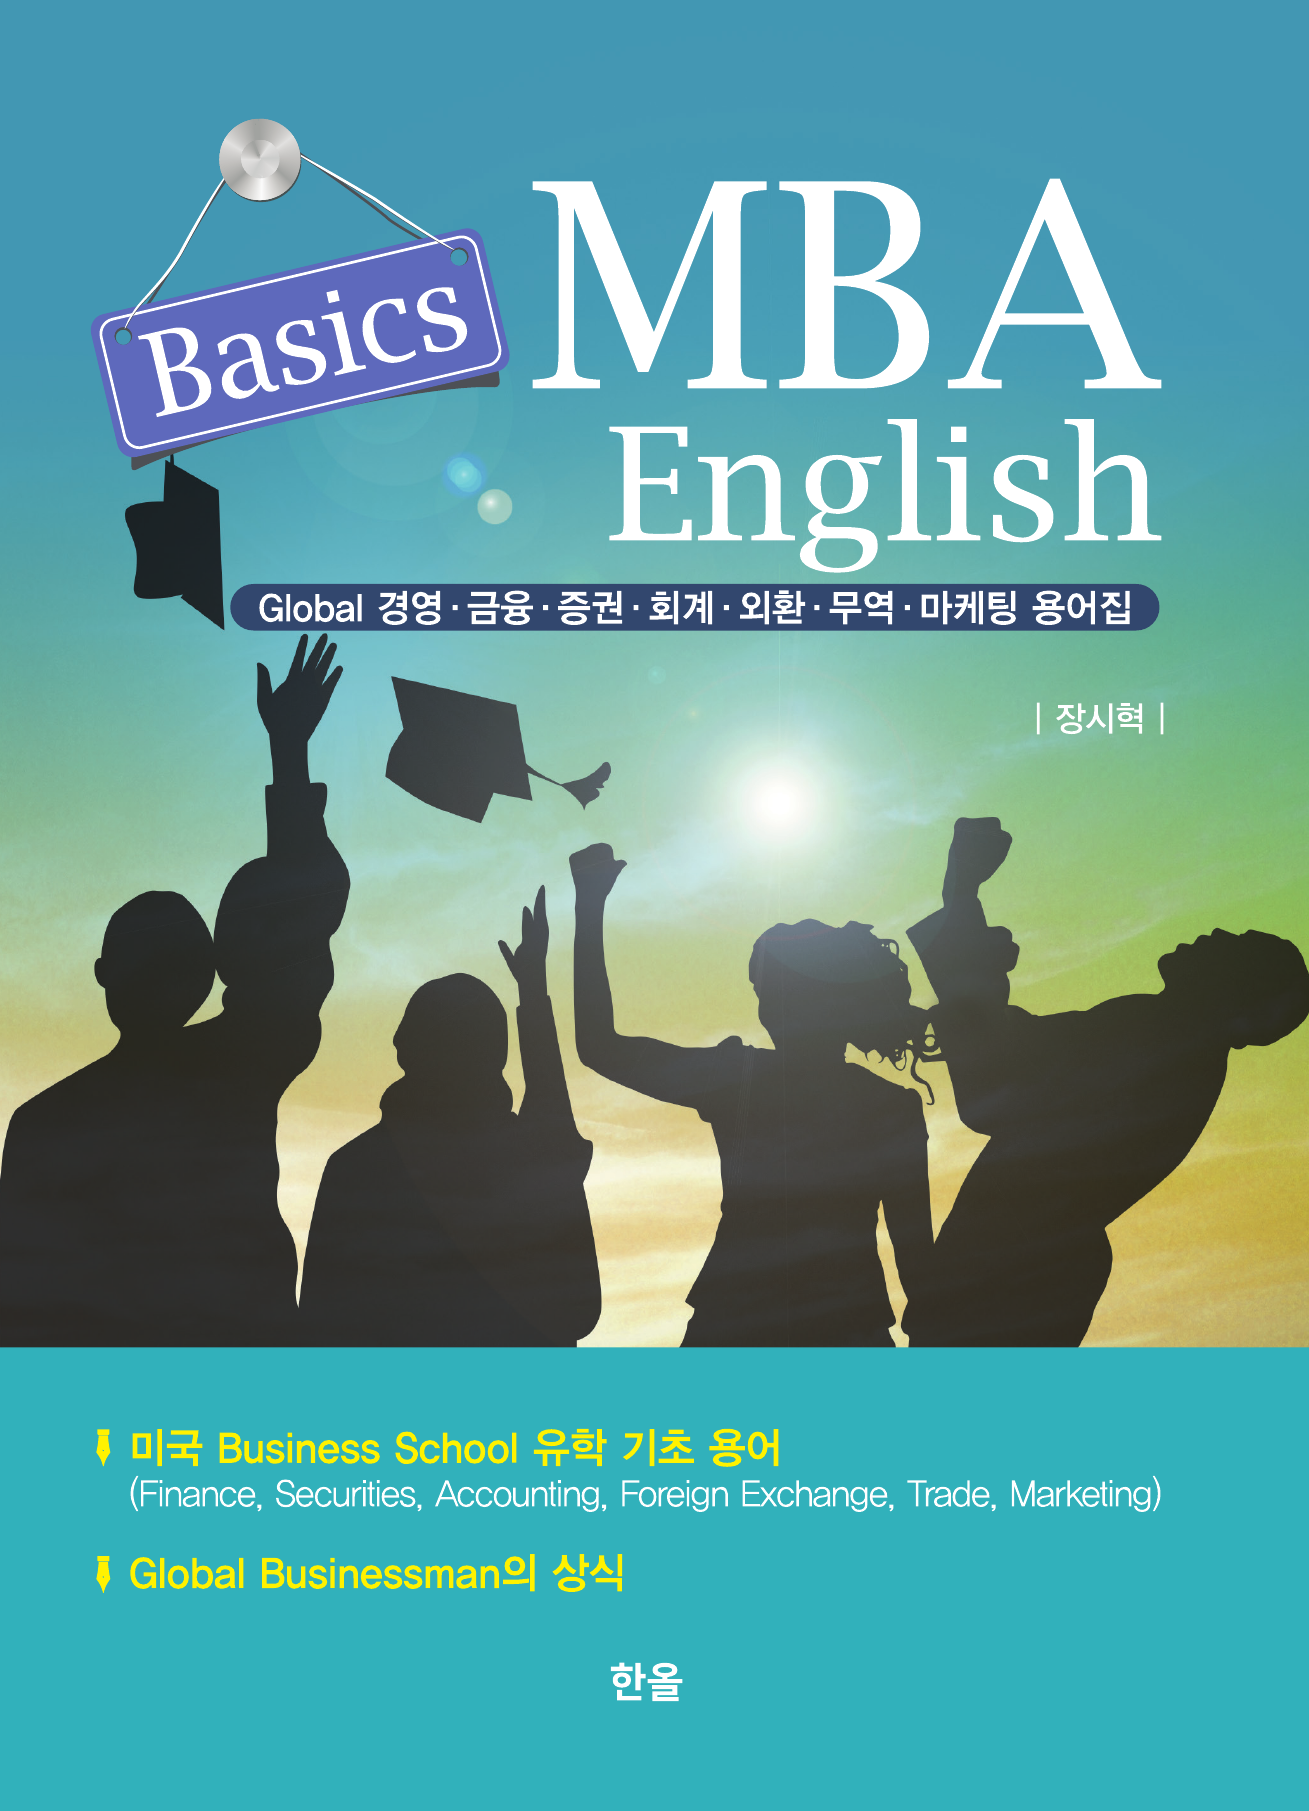 MBA English Basics Global (경영, 금융, 증권, 외환, 무역, 마케팅 용어집)